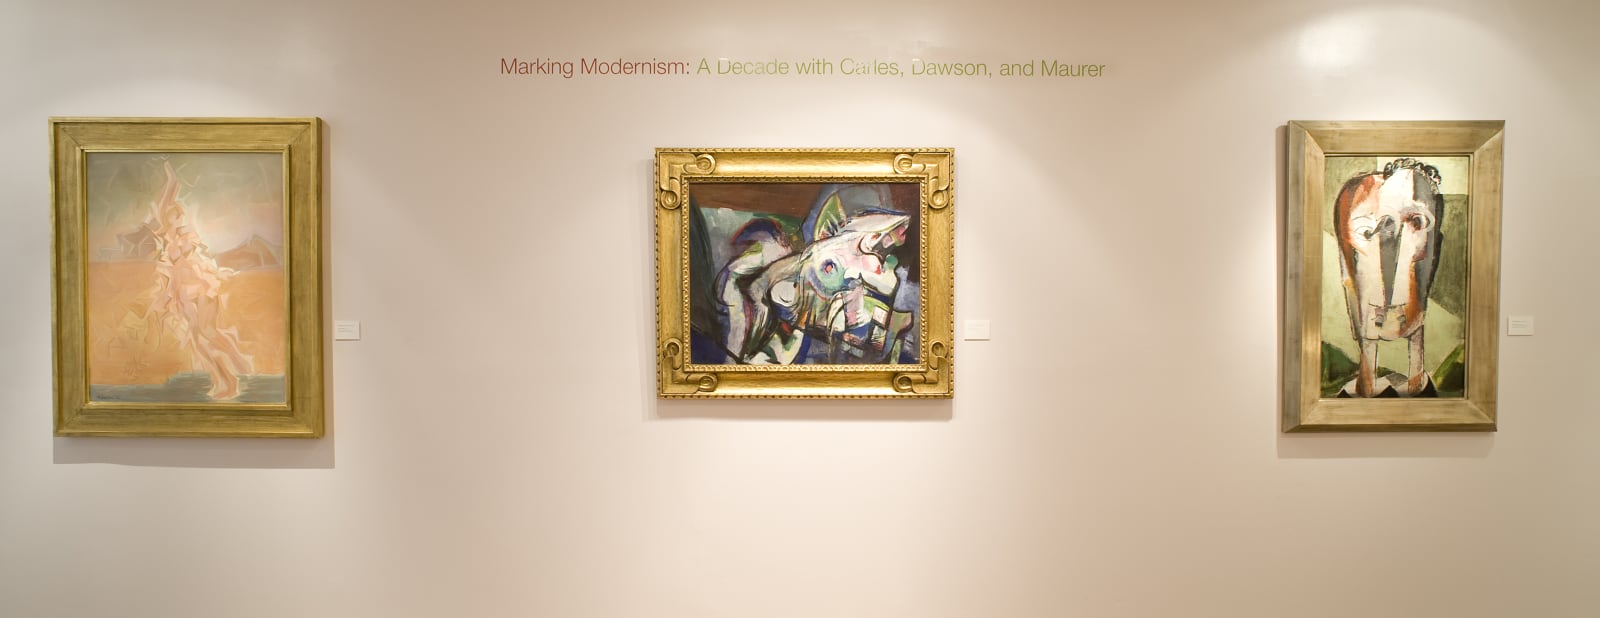 Installation view: Marking Modernism: A Decade with Carles, Dawson, and Maurer